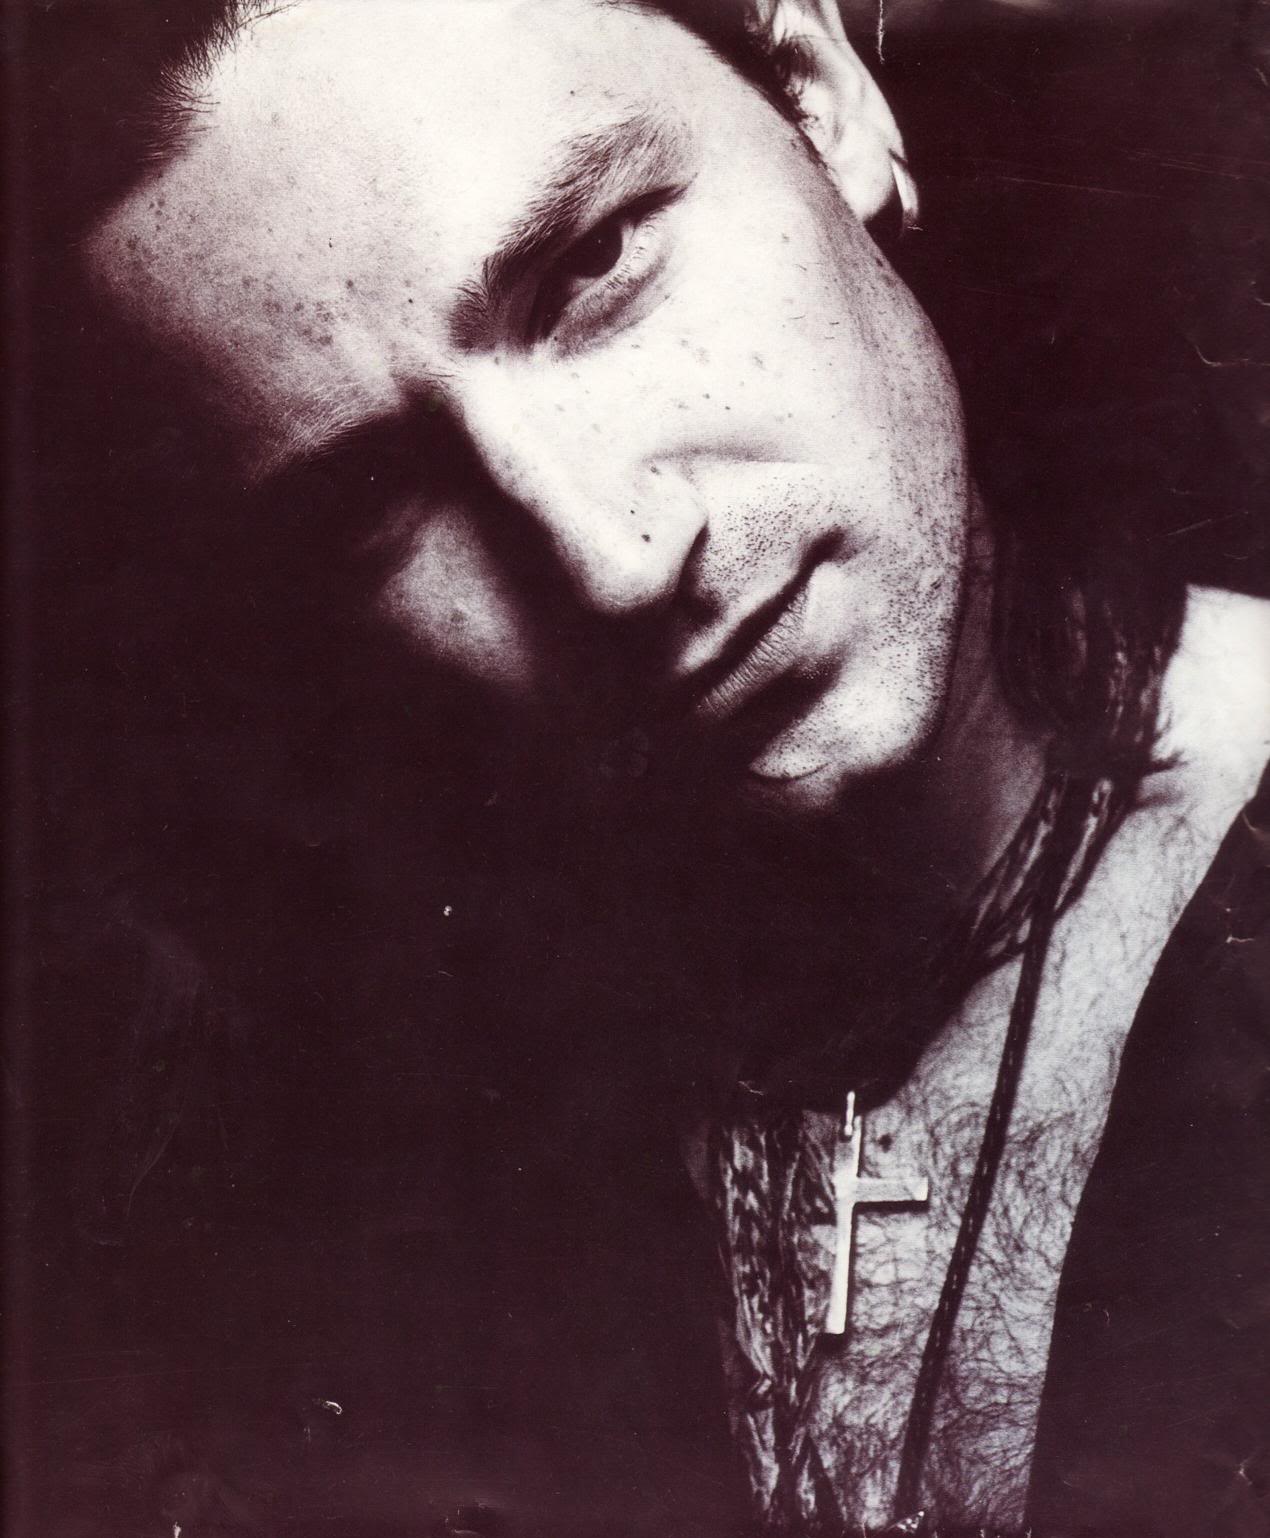 Young Bono. I ♥ U2. Bono u Musicians and Music image